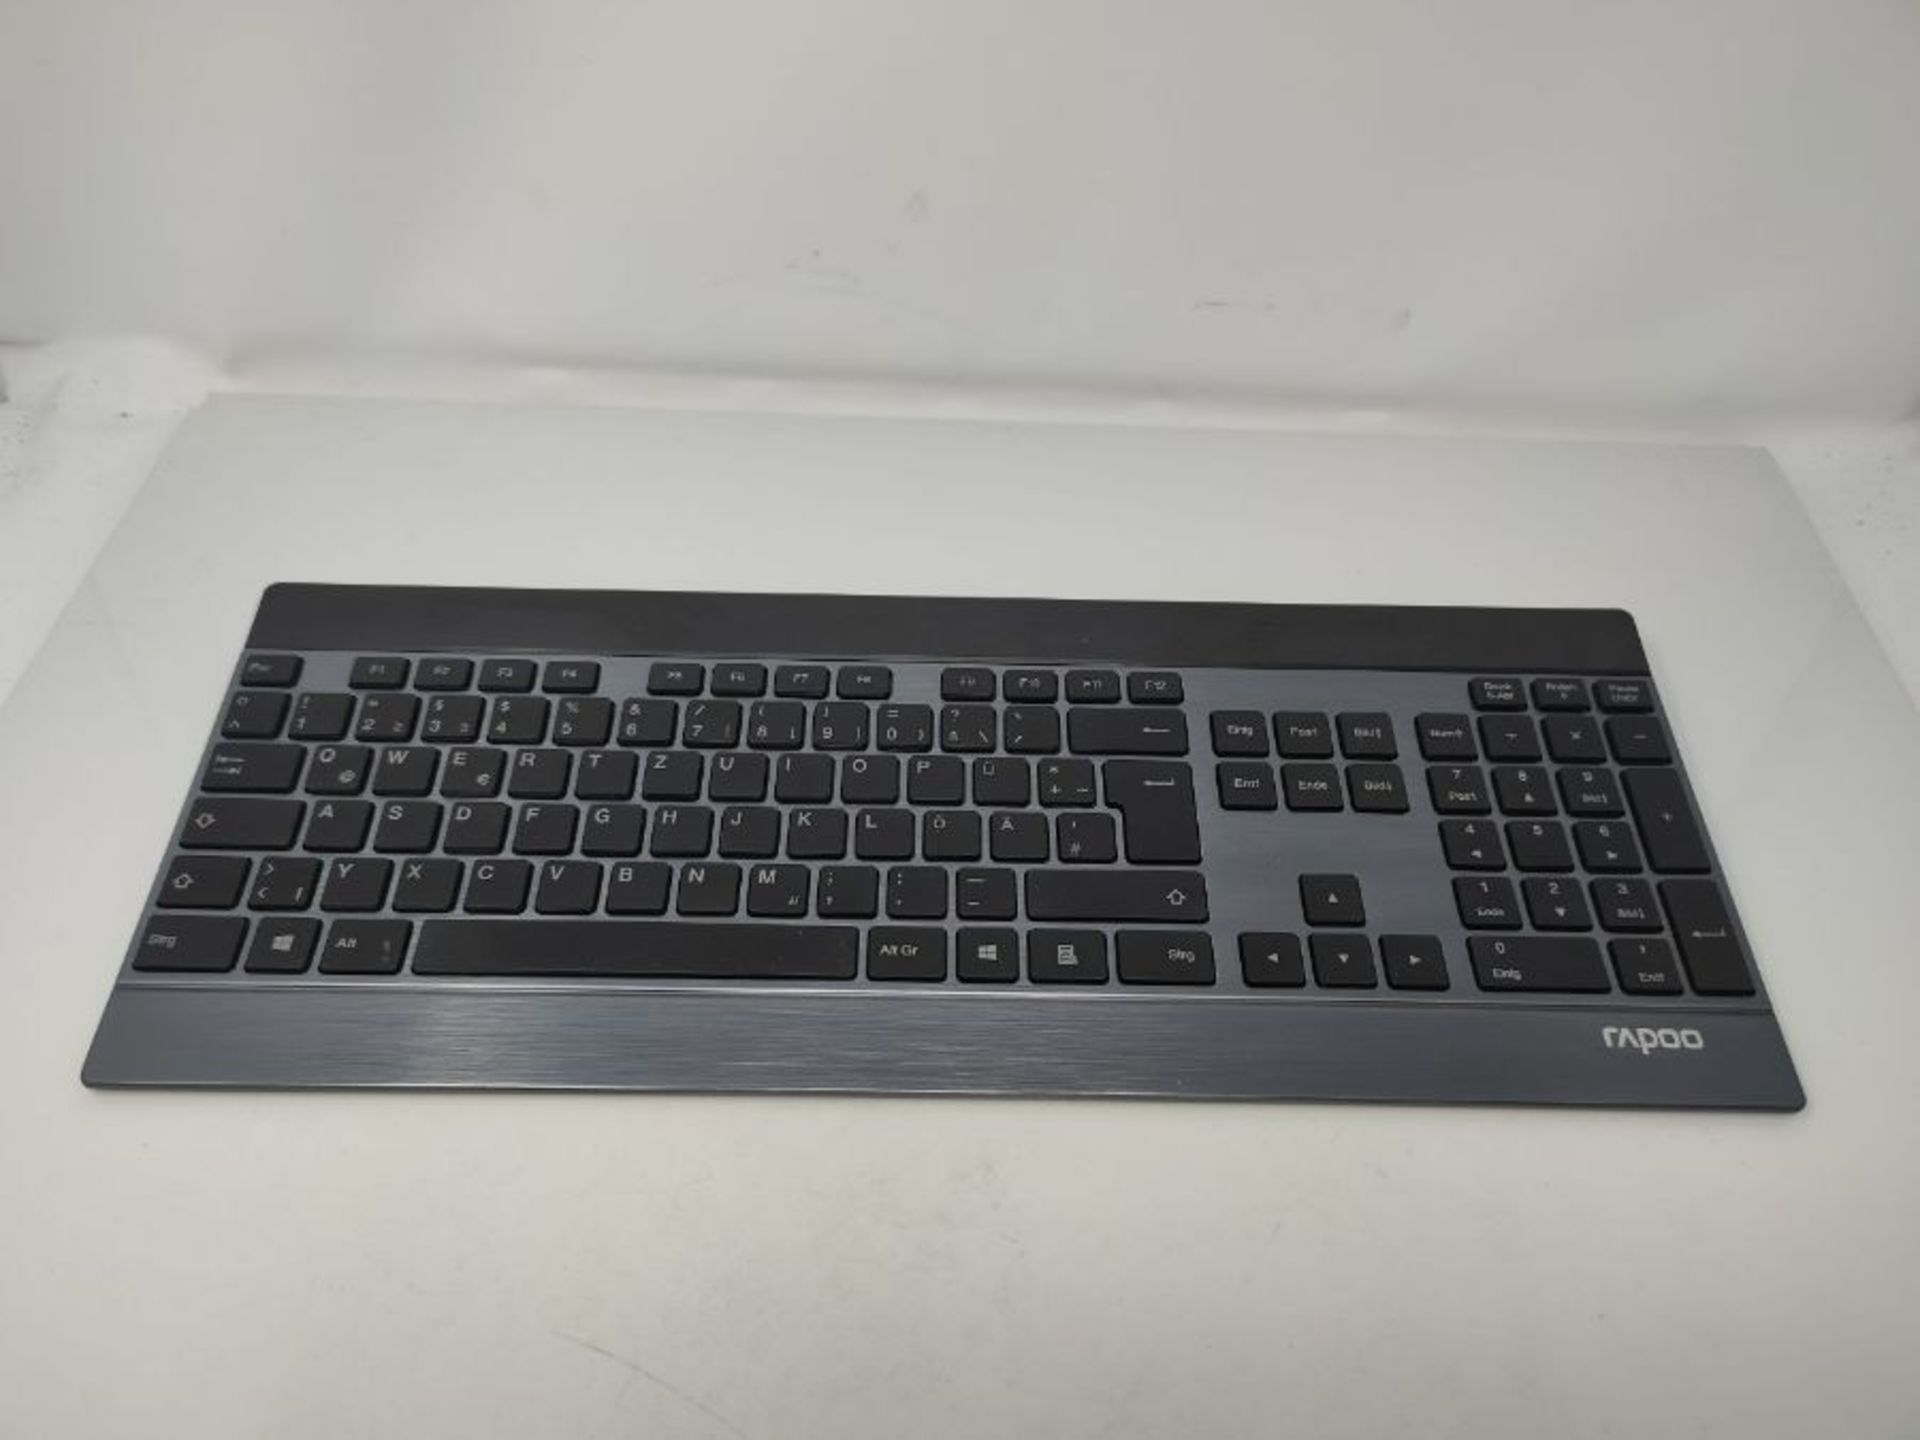 Rapoo E9270P kabellose Tastatur, Wireless (5 GHz) via USB, flaches Aluminium Design, F